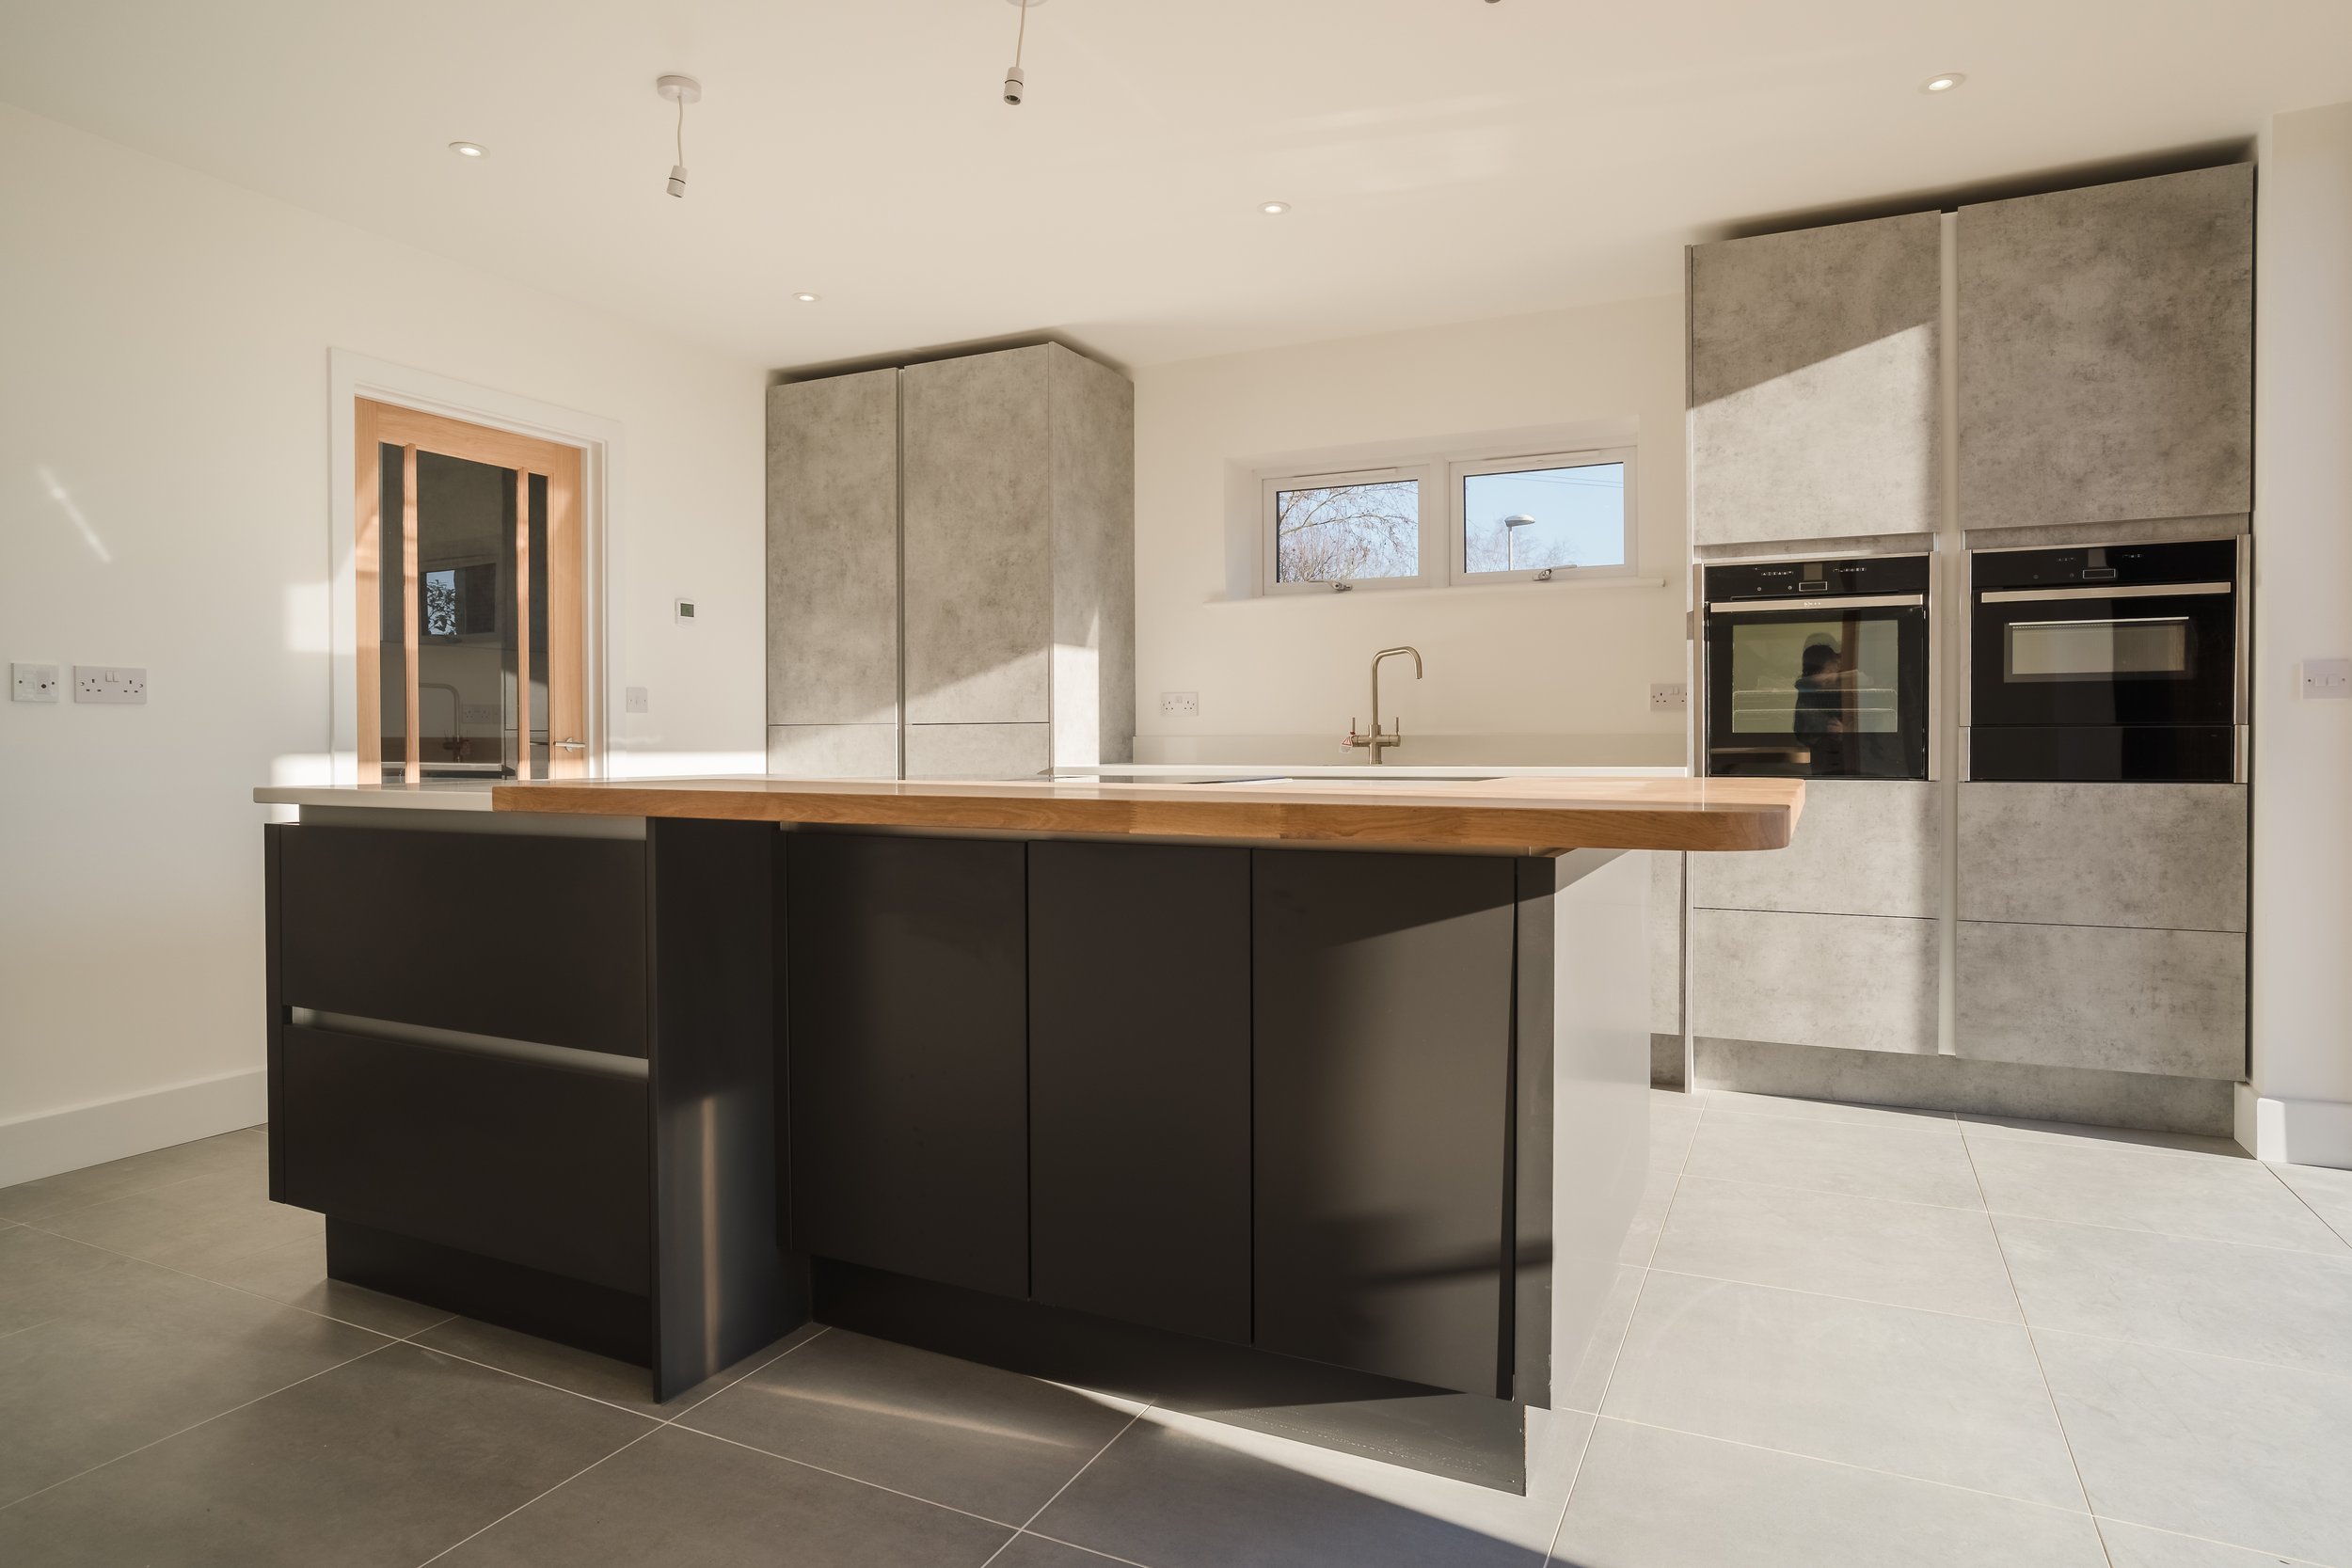 Kitchen - new 5 bedroom home, Wilburton, Cambridgeshire.